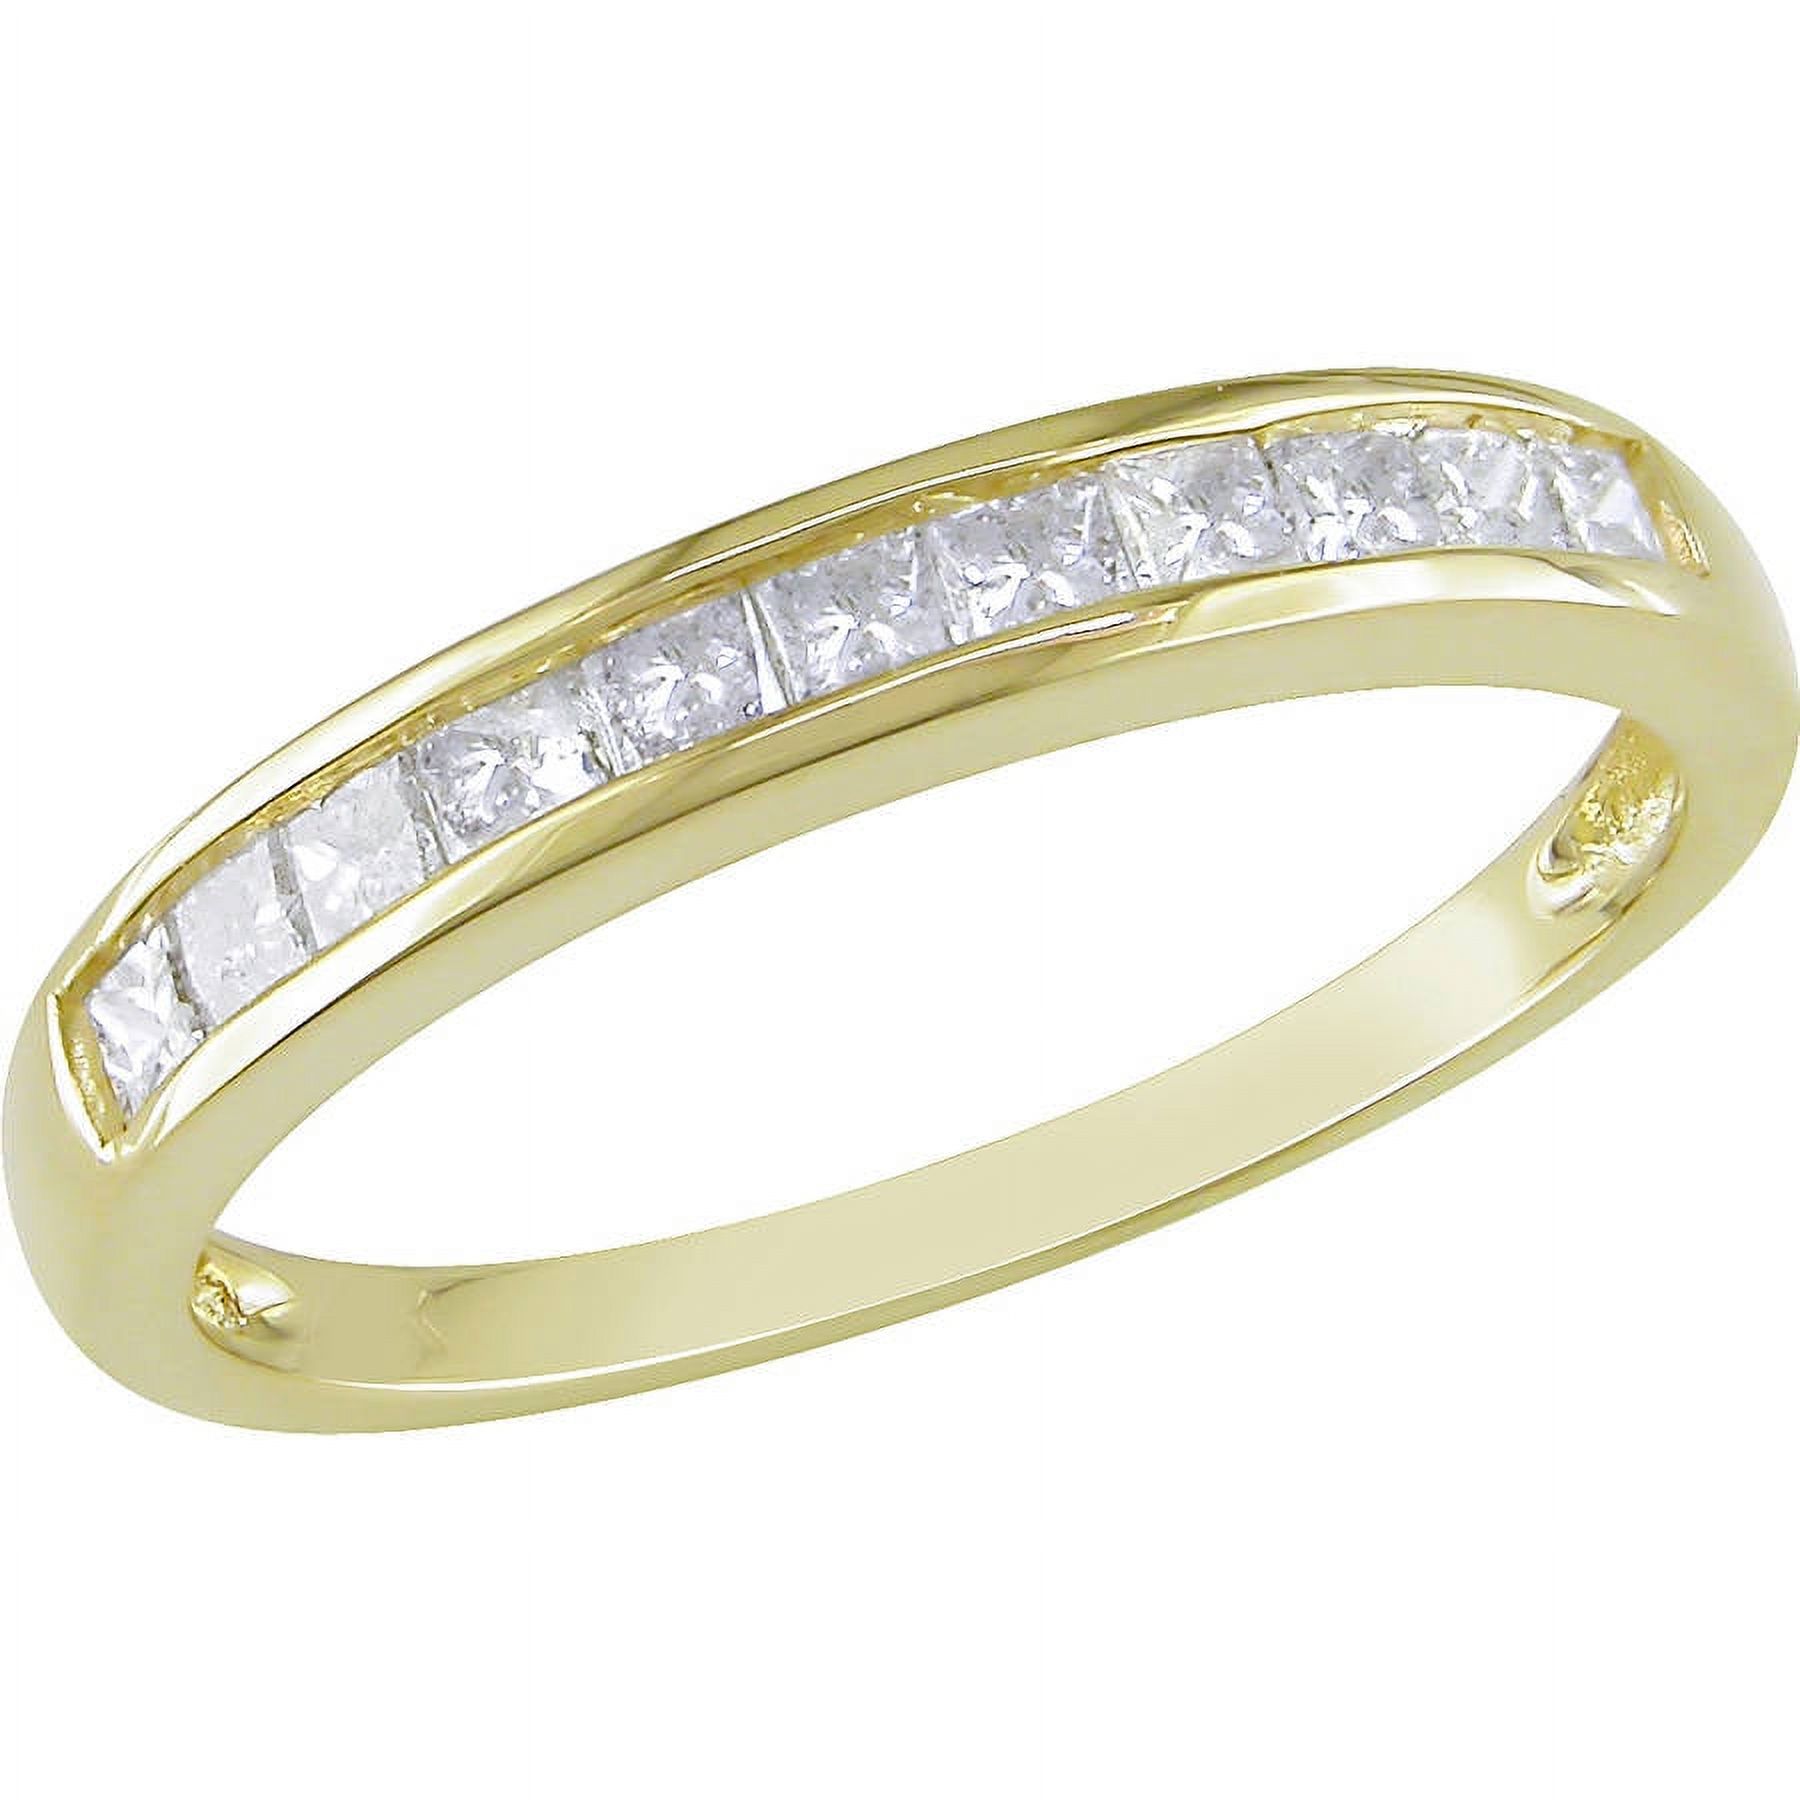 1/2 Carat T.W. Princess-Cut Diamond 14kt Yellow Gold Semi-Eternity Anniversary Ring - image 1 of 4